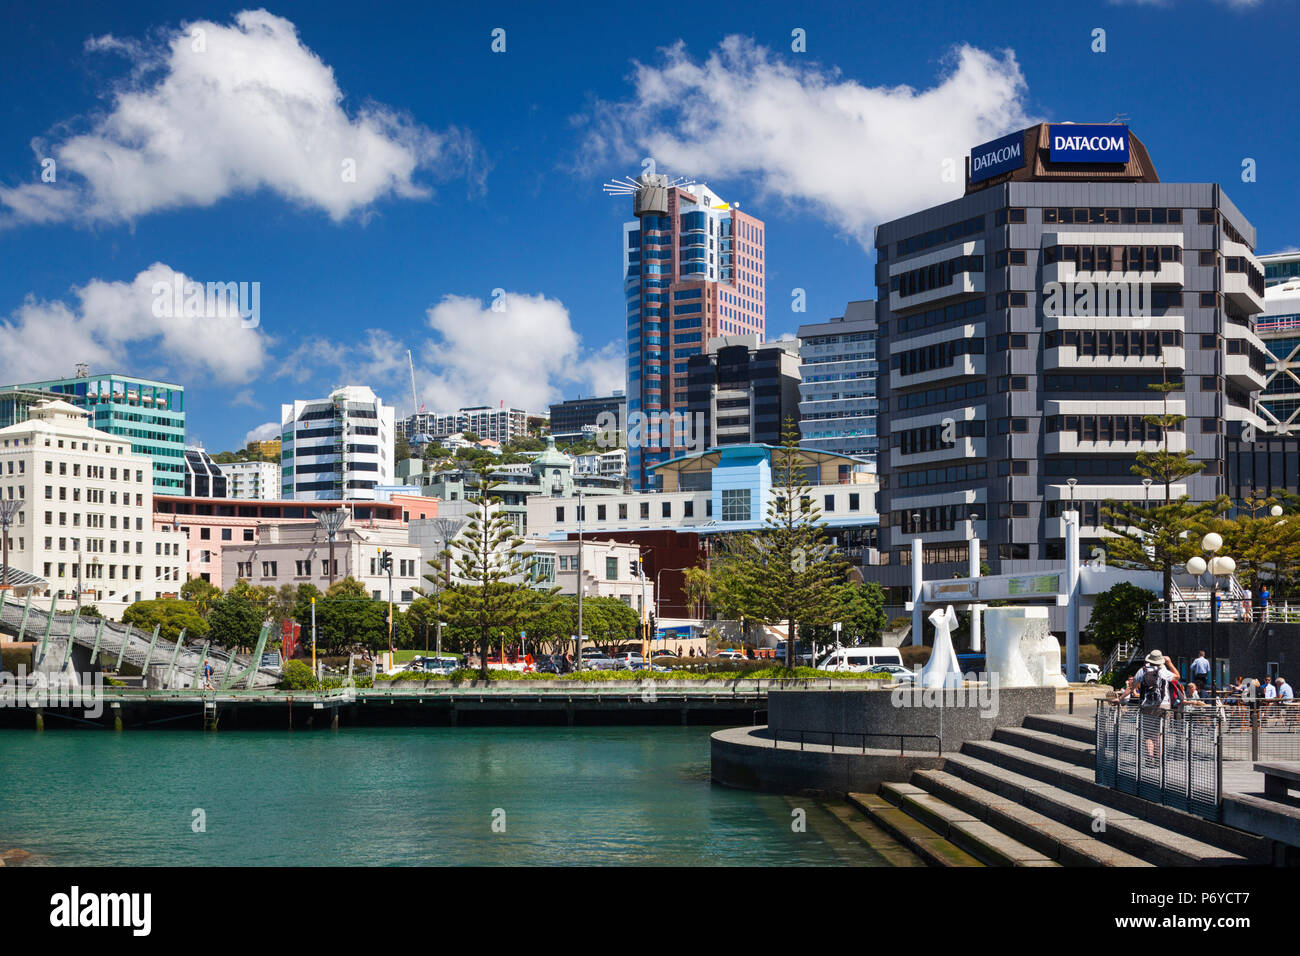 New Zealand, North Island, Wellington, skyline and waterfront buildings Stock Photo